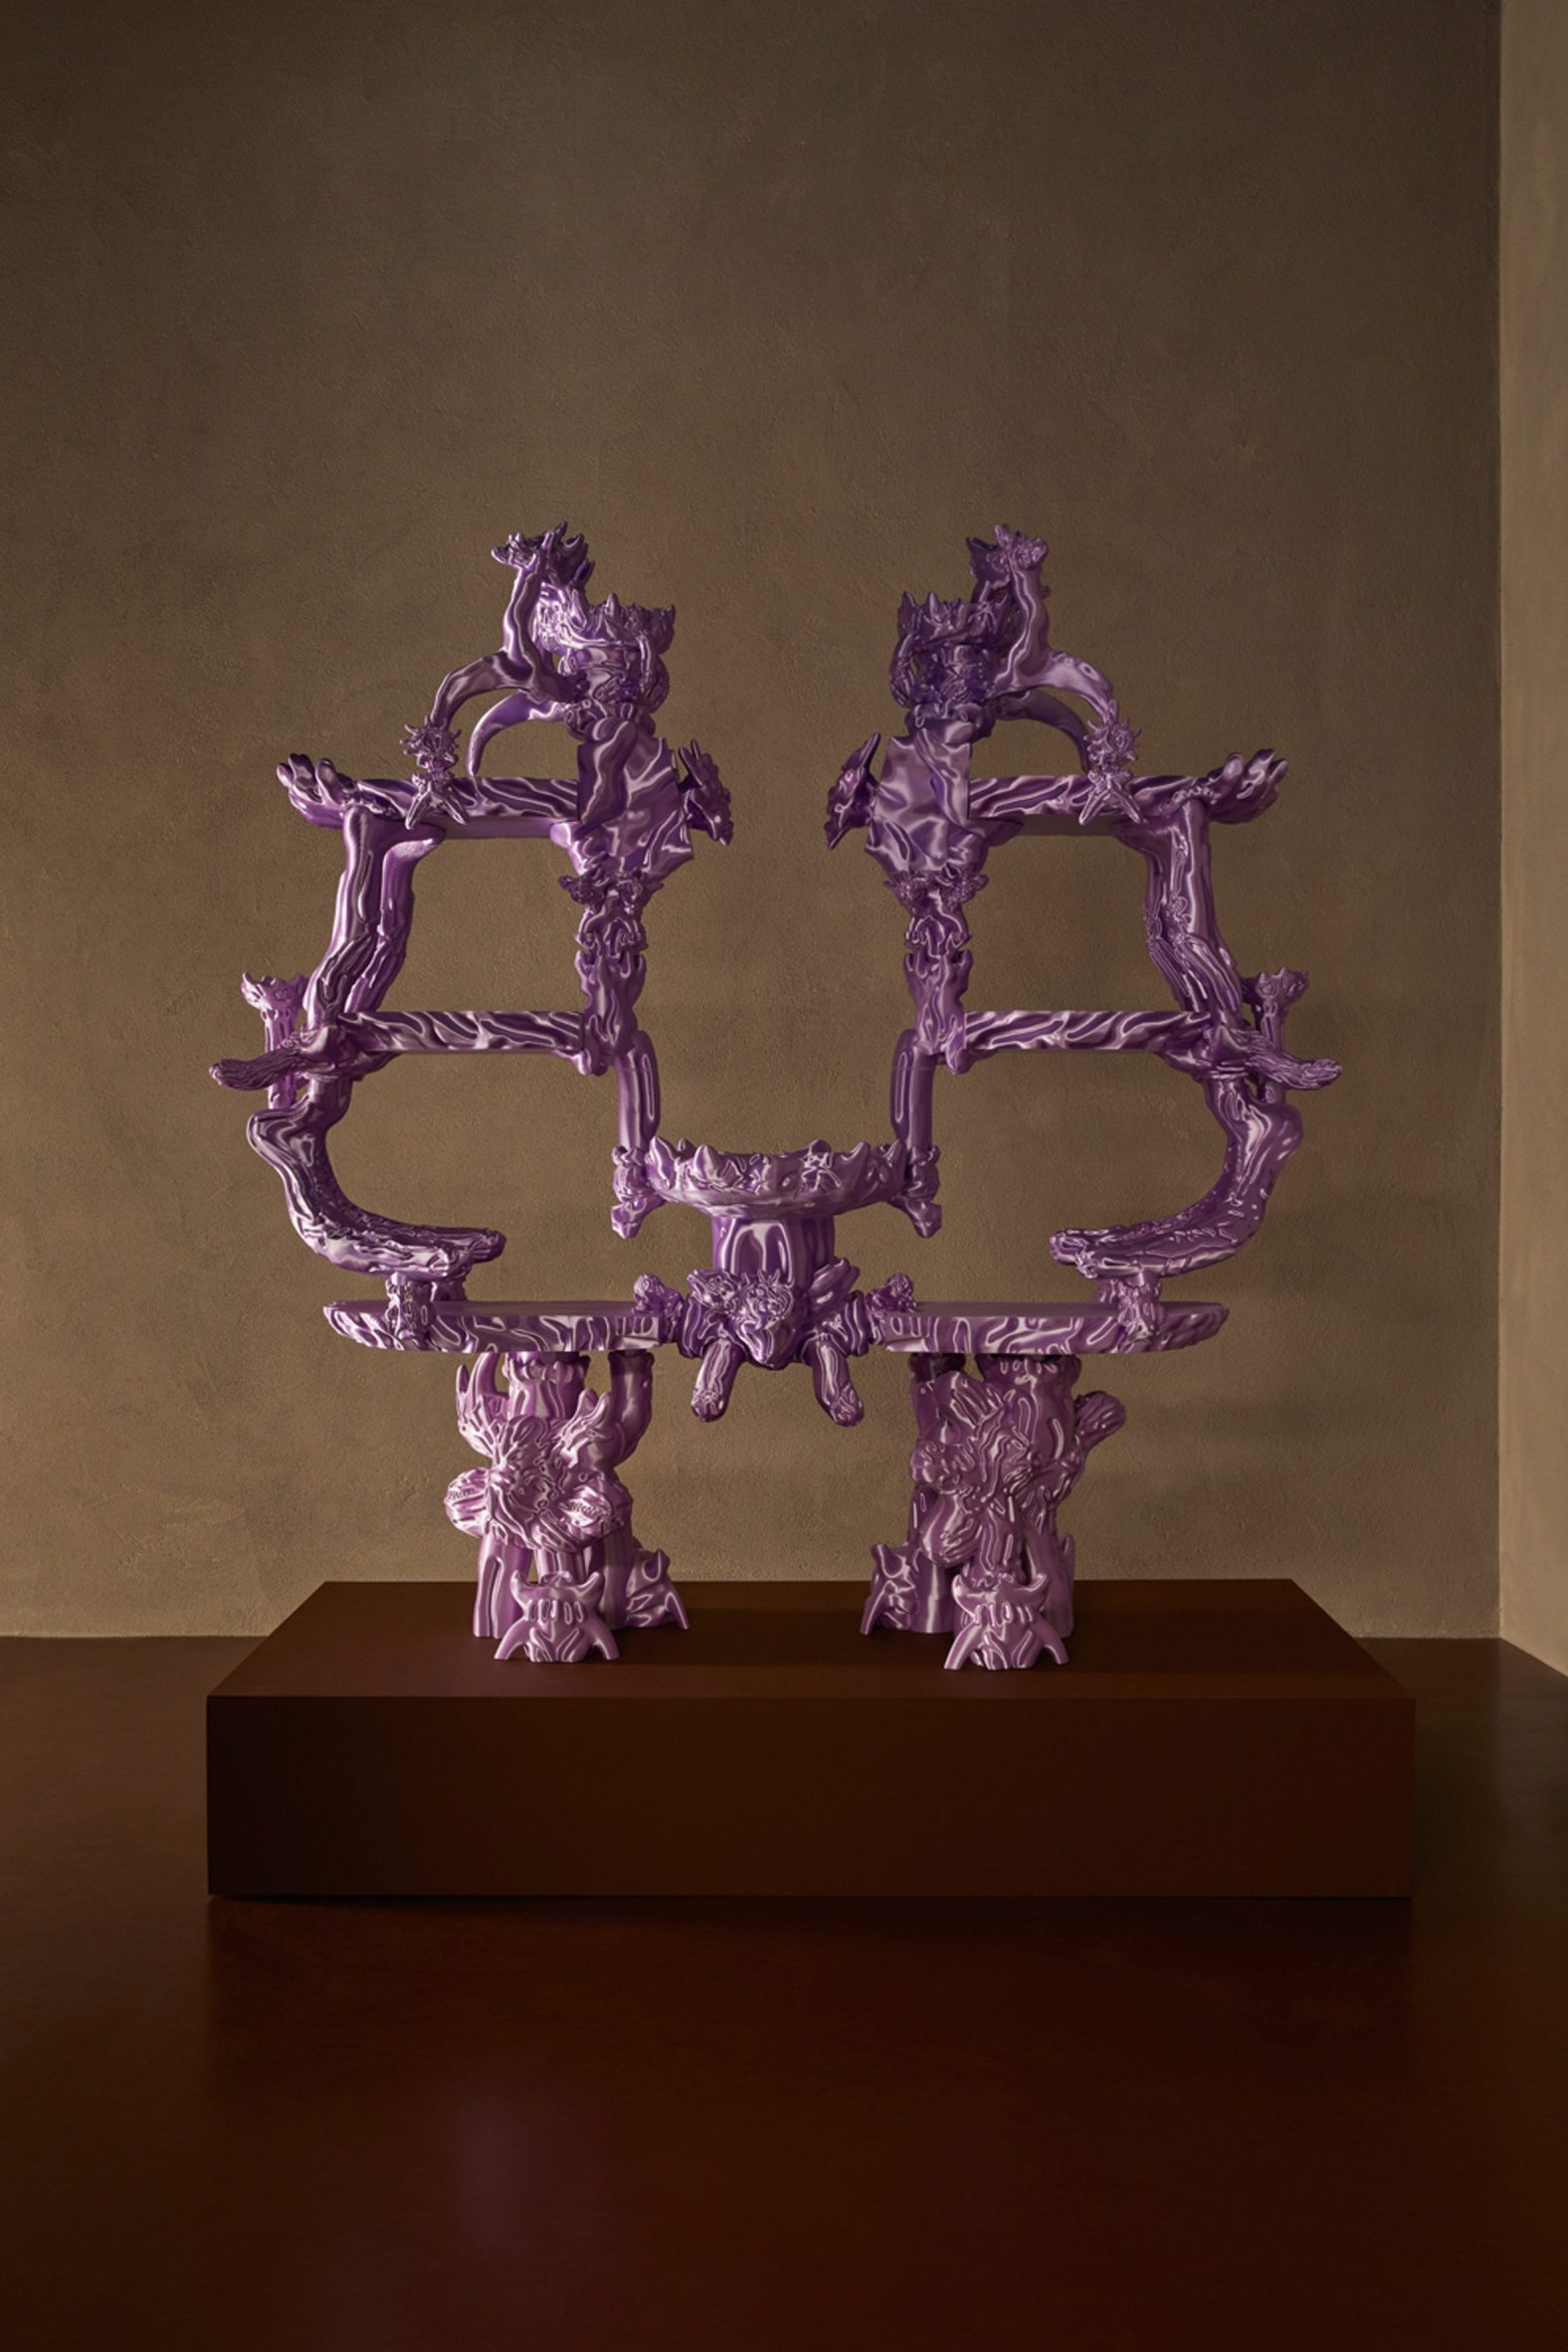 Metallic purple sculpture by Audrey Large